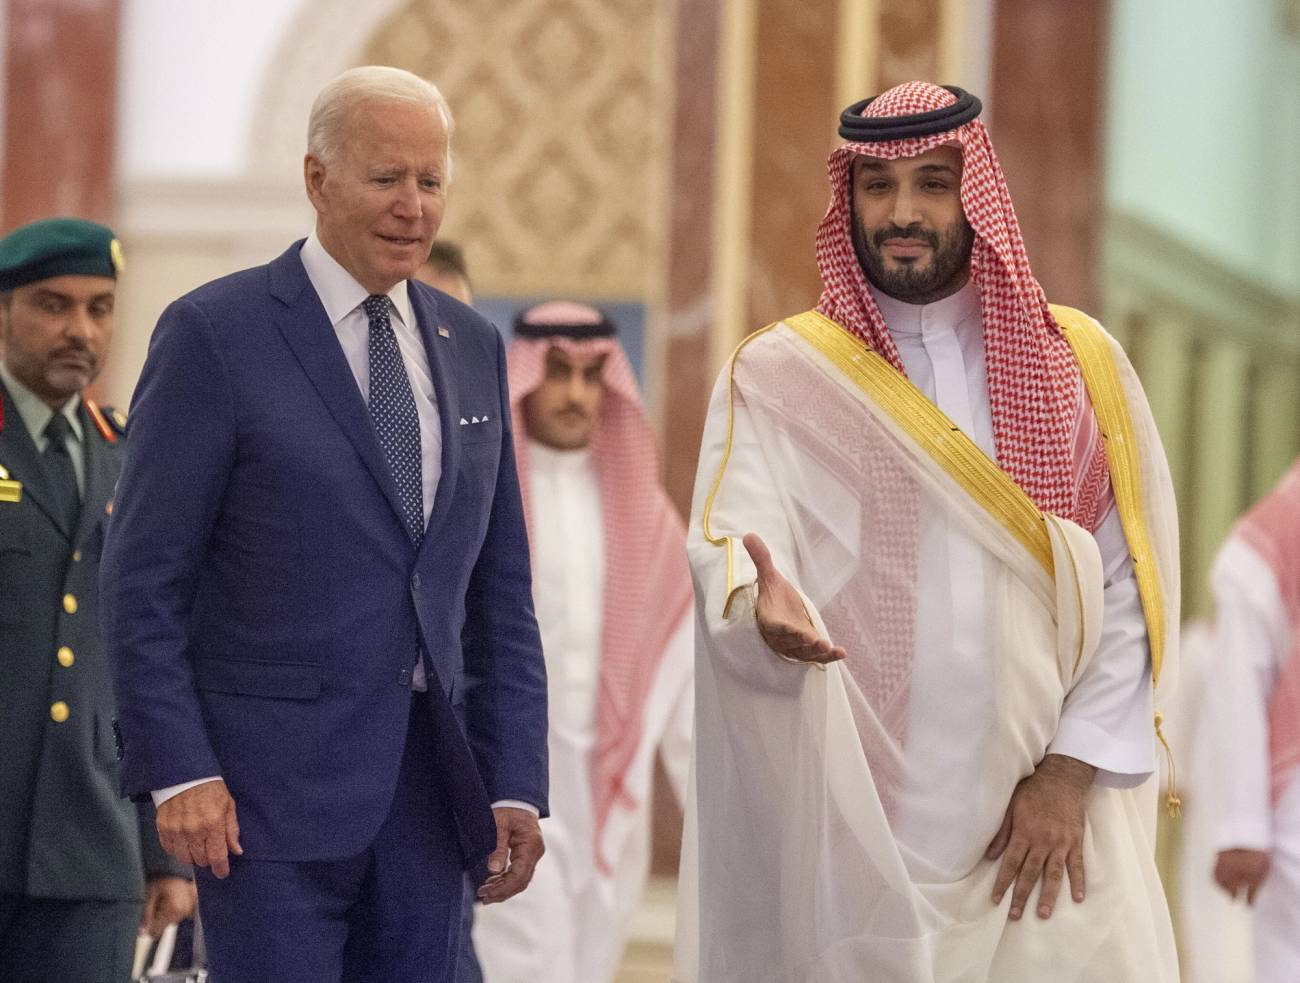 Royal Court of Saudi Arabia/Anadolu Agency via Getty Images